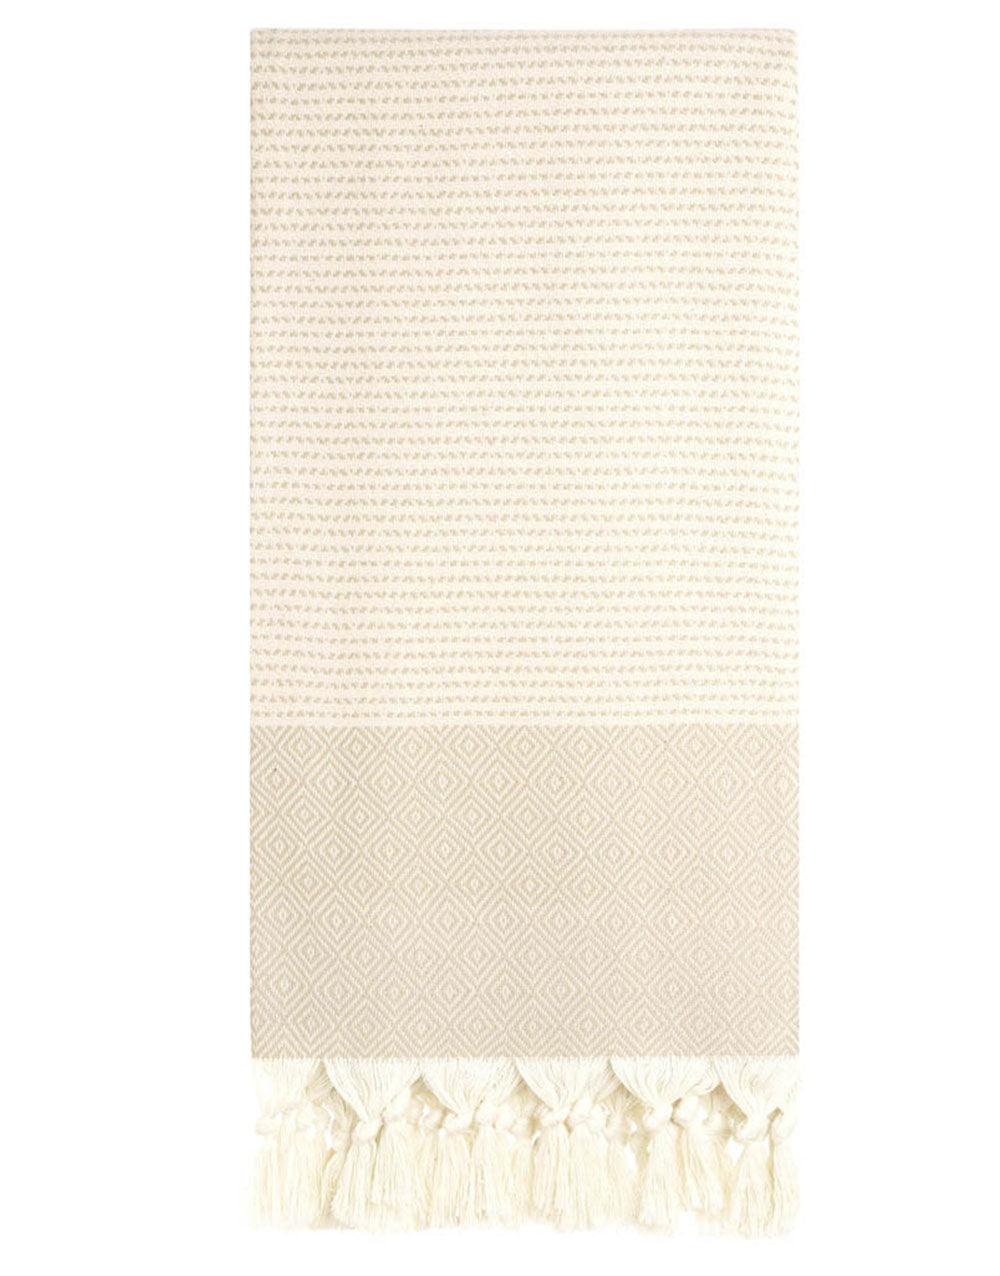 Cacala Turkish Towel Satranc Peshtemal 39"x71" 100% Cotton - Cacala